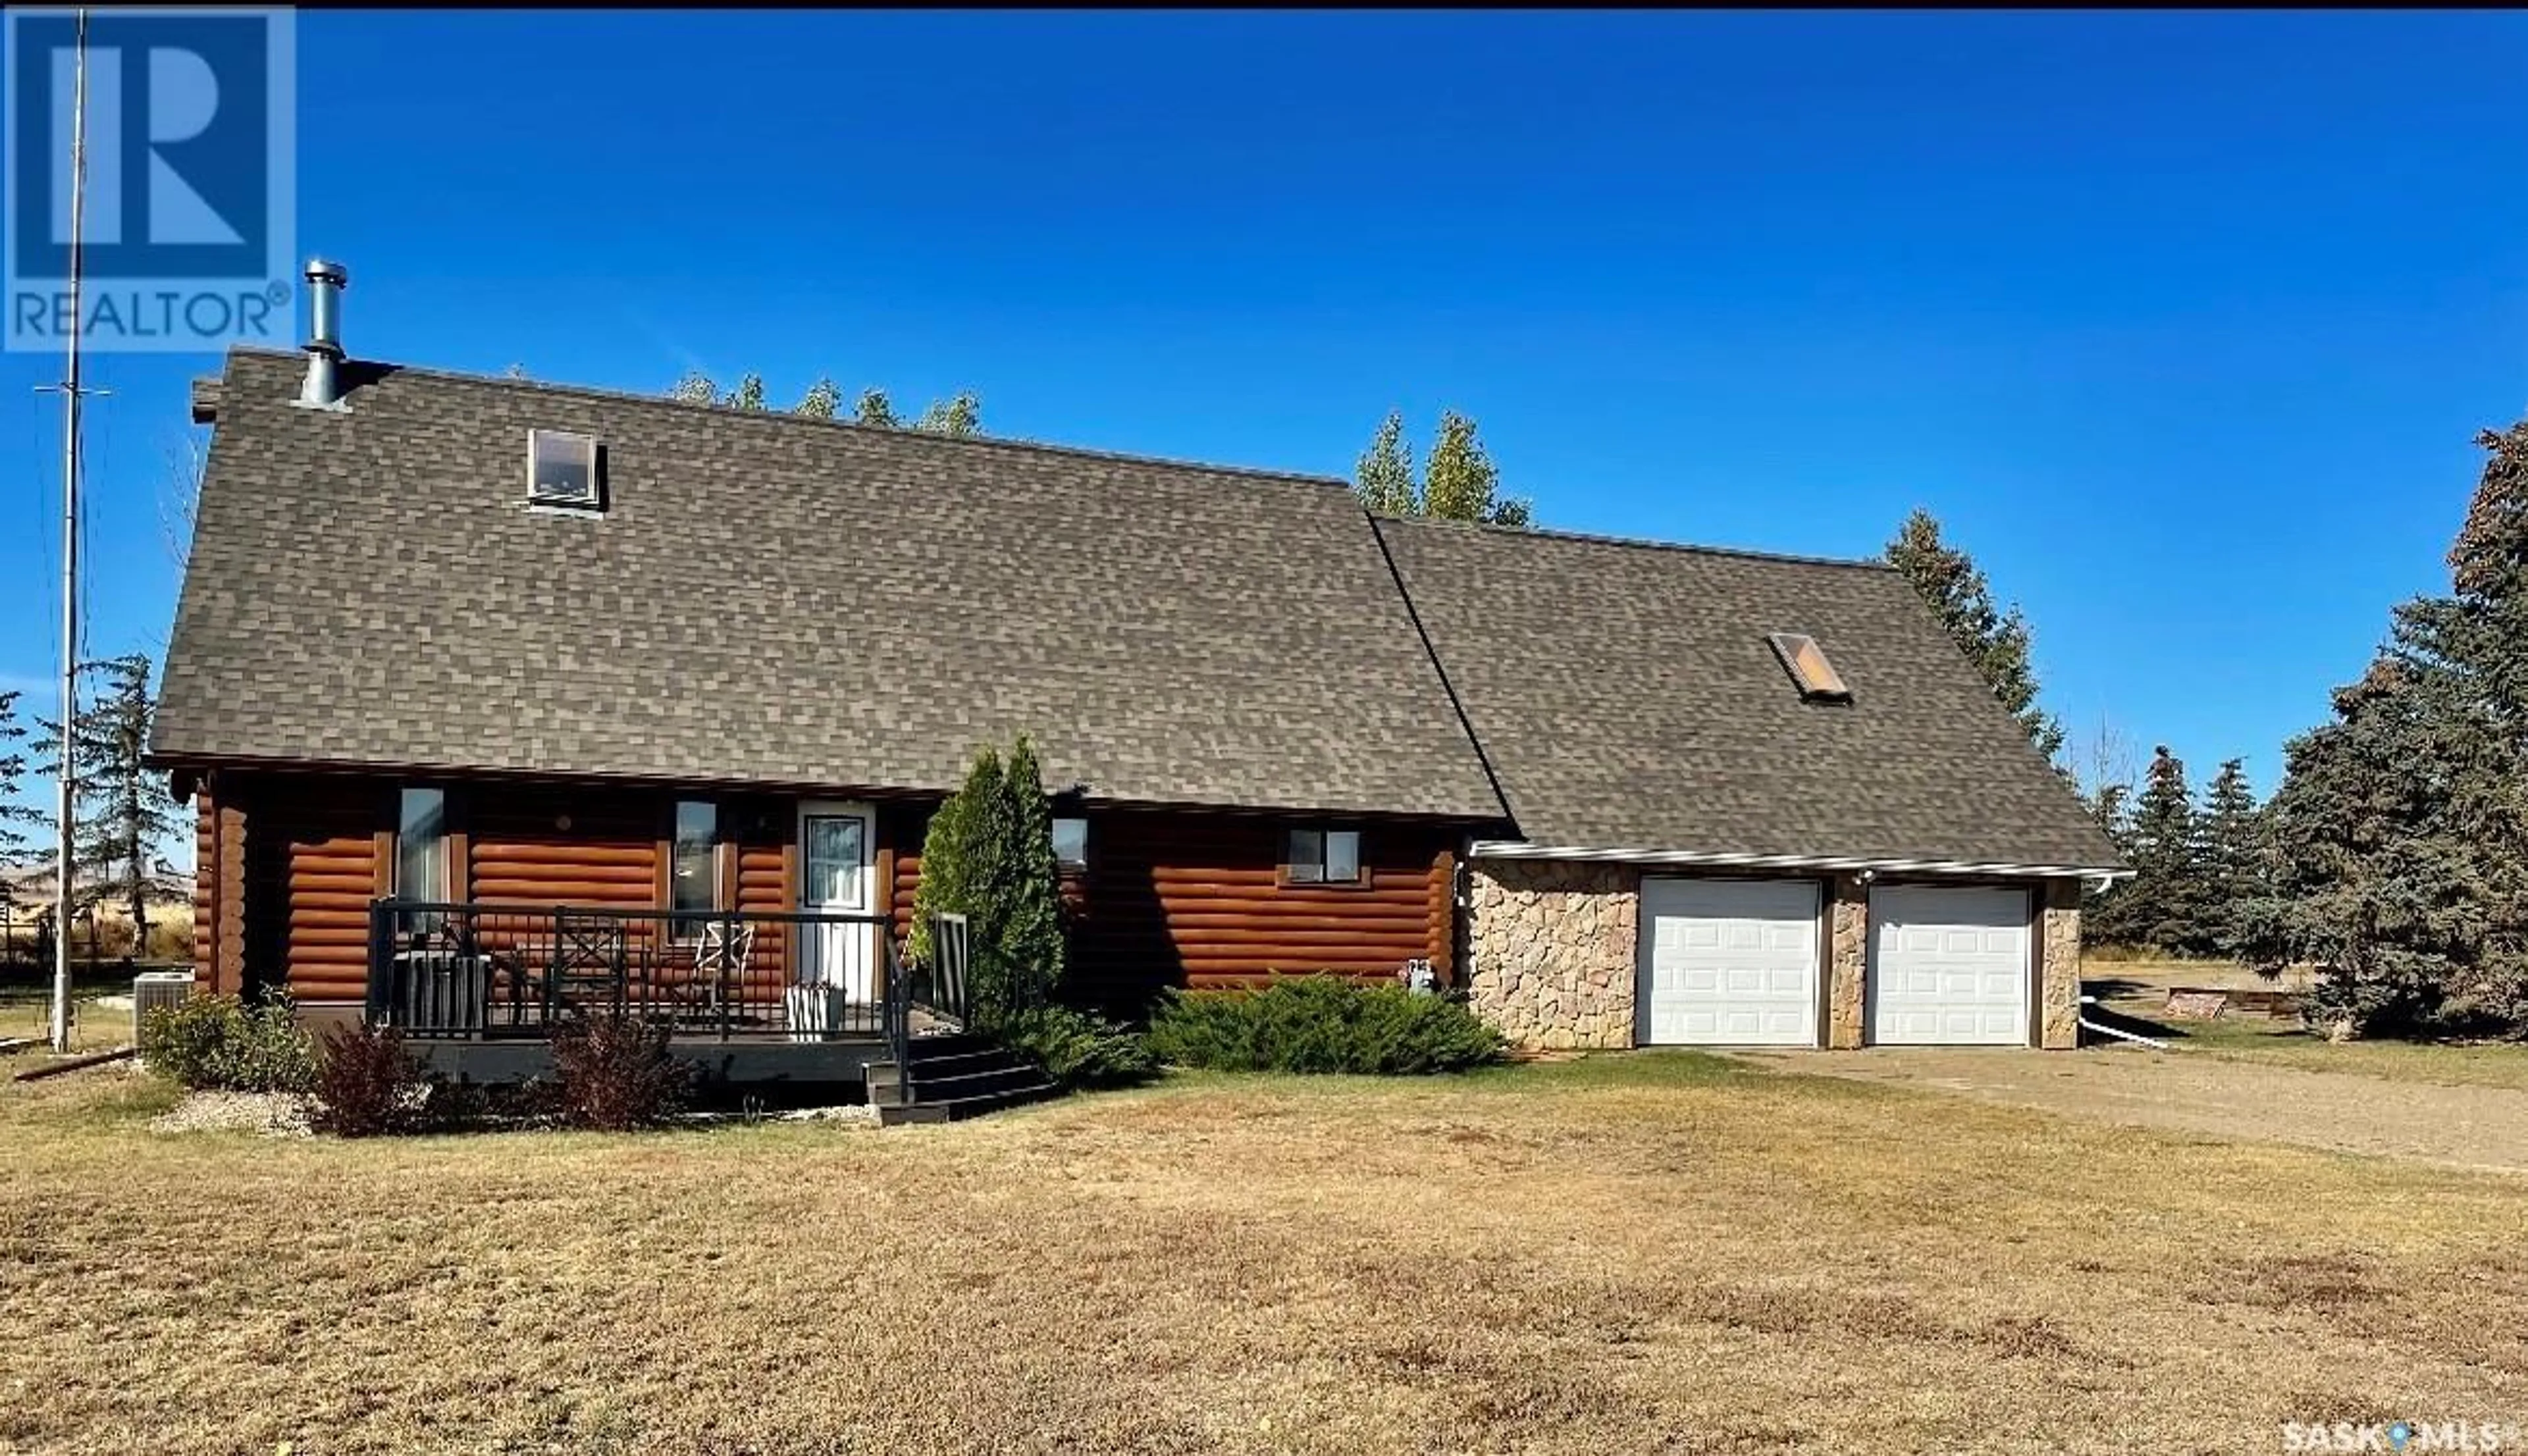 Home with brick exterior material for Log House Acreage, Loreburn Rm No. 254 Saskatchewan S0H2S0